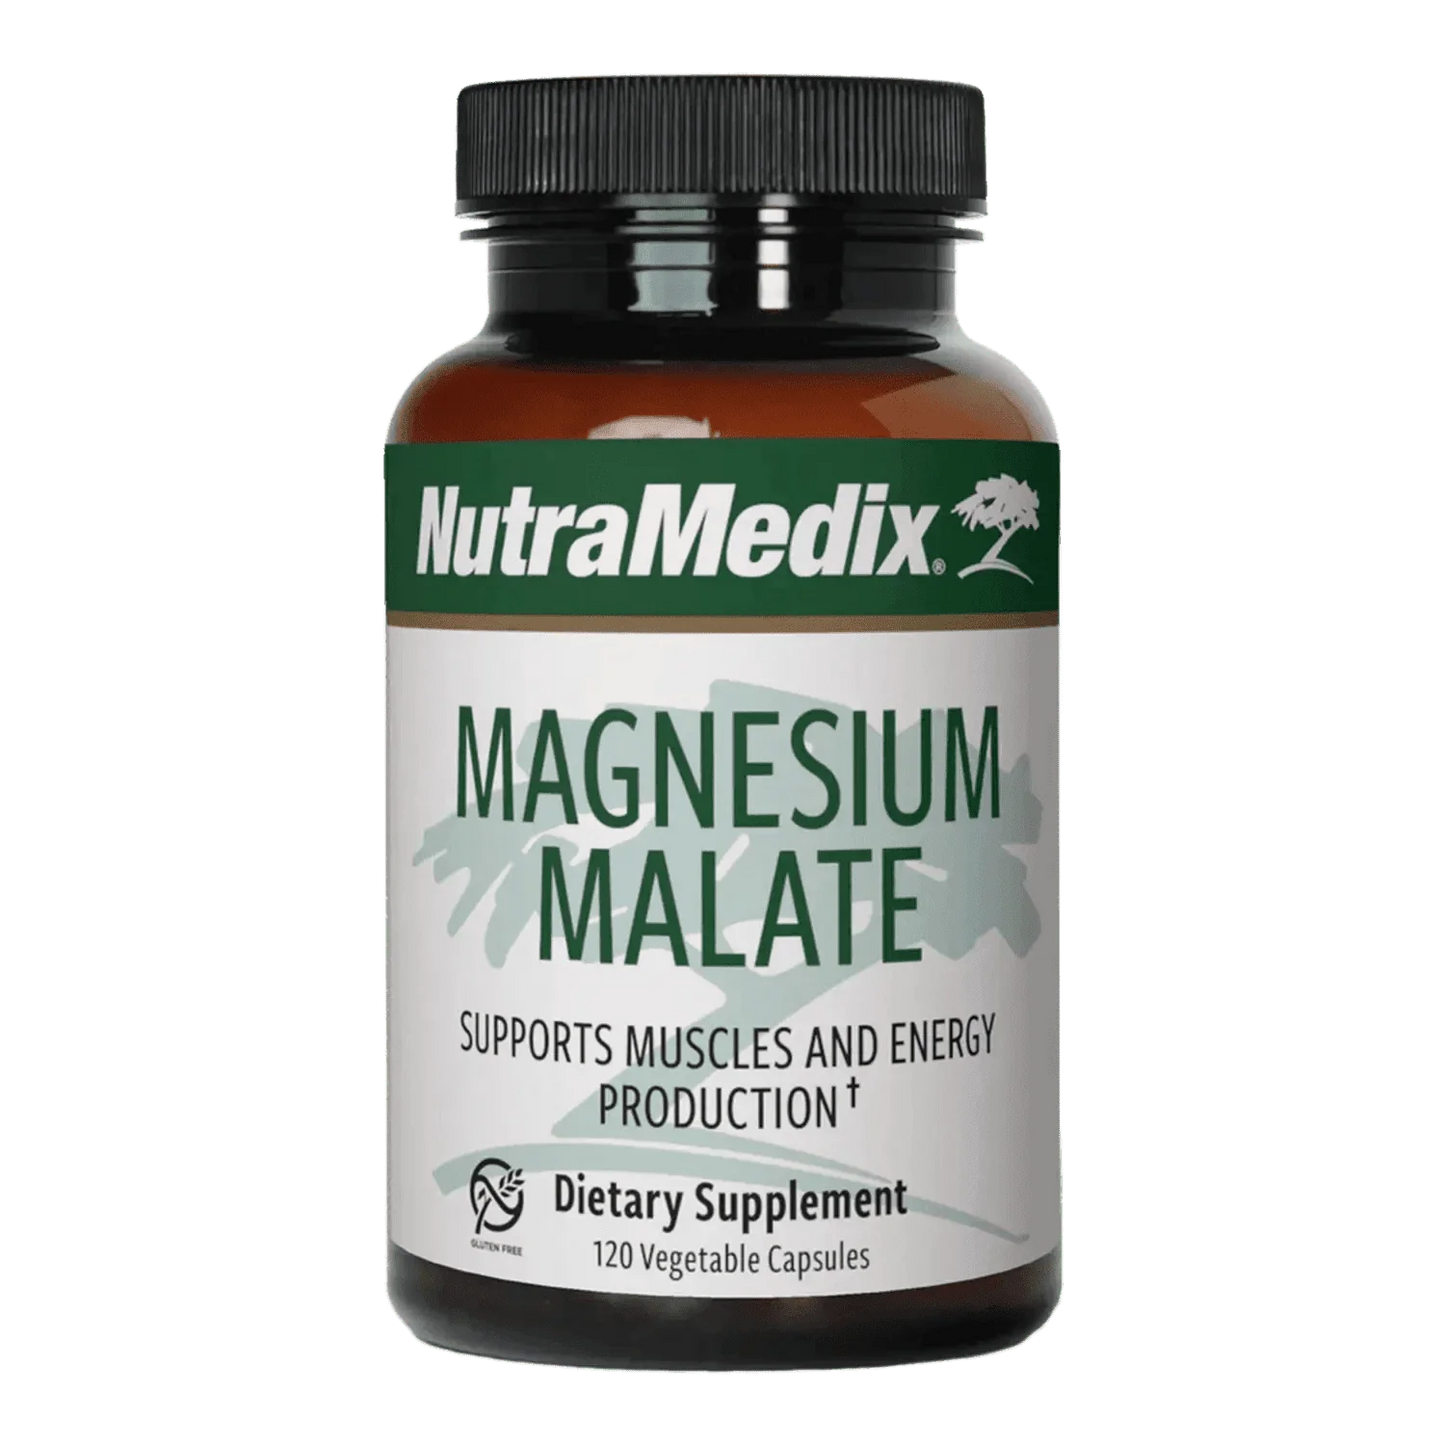 Magnesium Malate